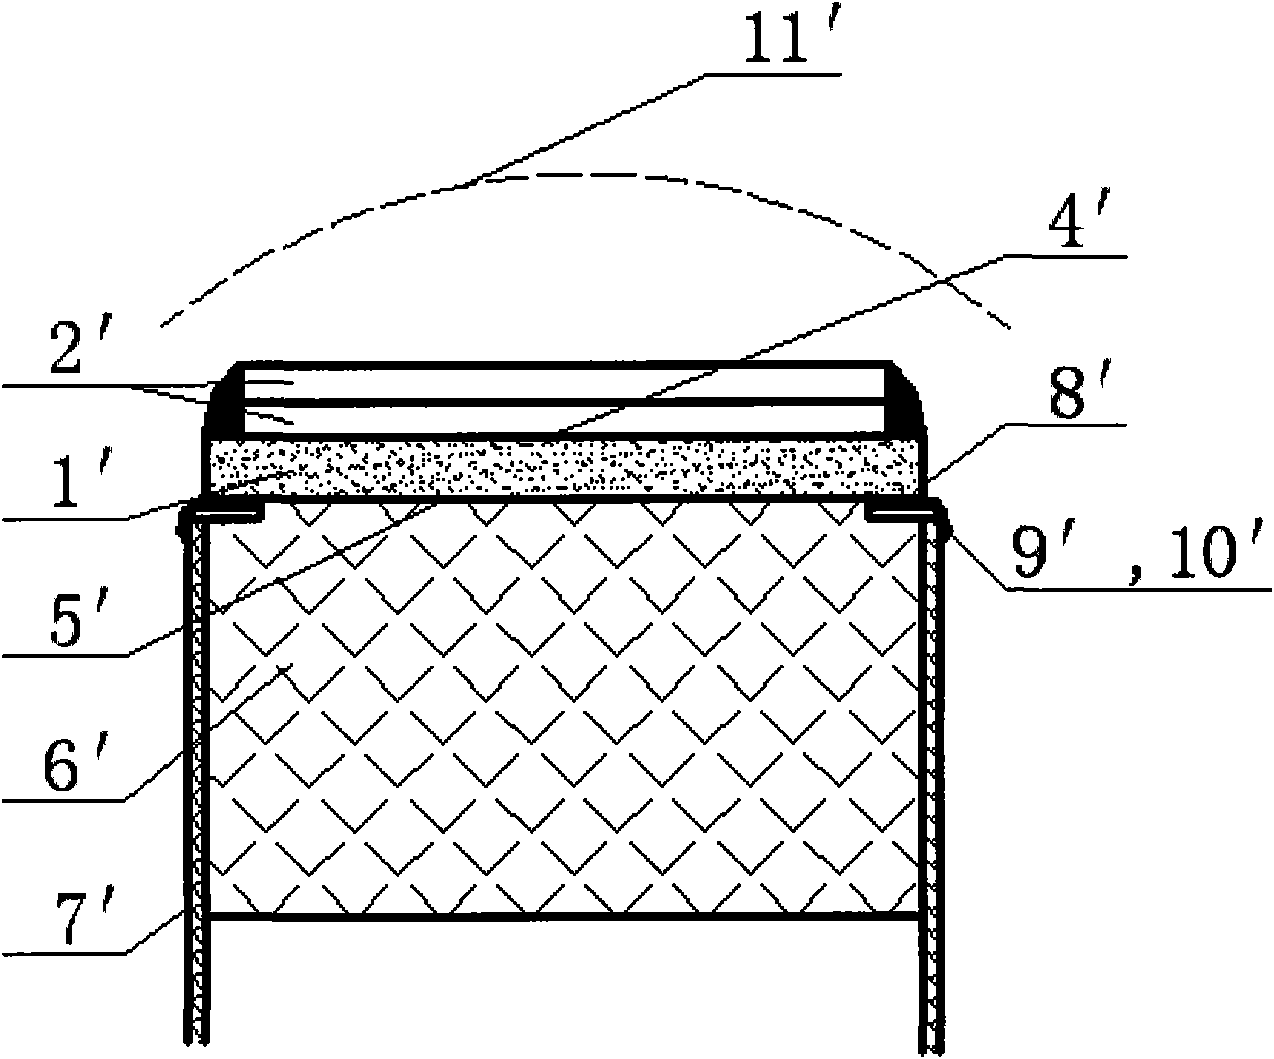 Manufacturing method of ultrasonic transducer